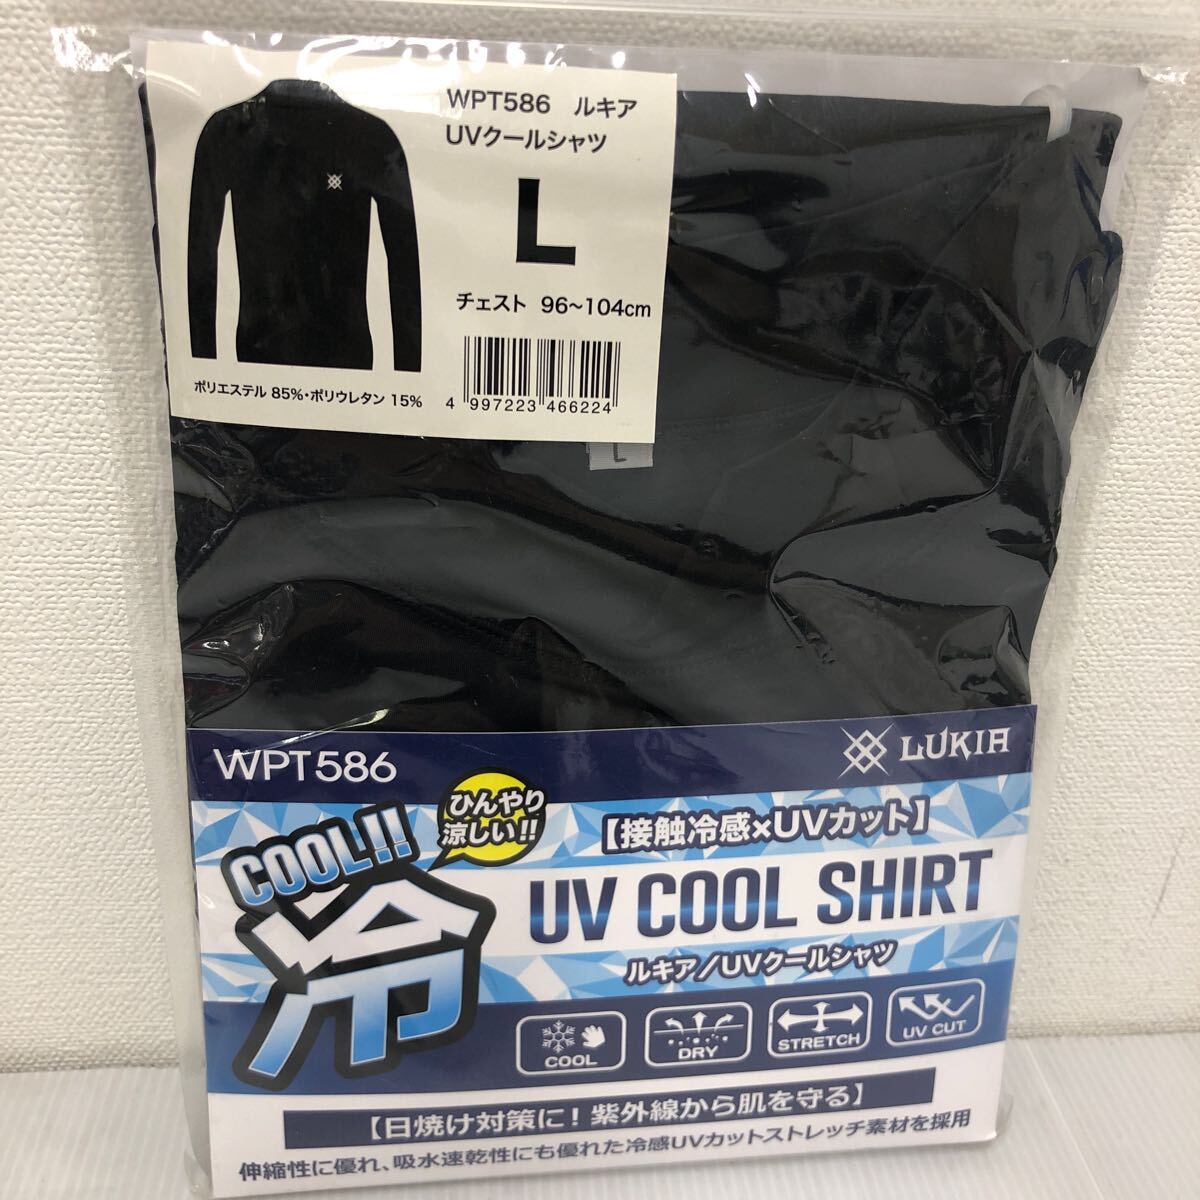 (LUKIA/ルキア) WPT586 UVクールシャツ 接触冷感 UVカットウェア 長袖 日焼け対策 熱中症対策 Tシャツ【新品未使用品】60サイズ発送60445の画像1